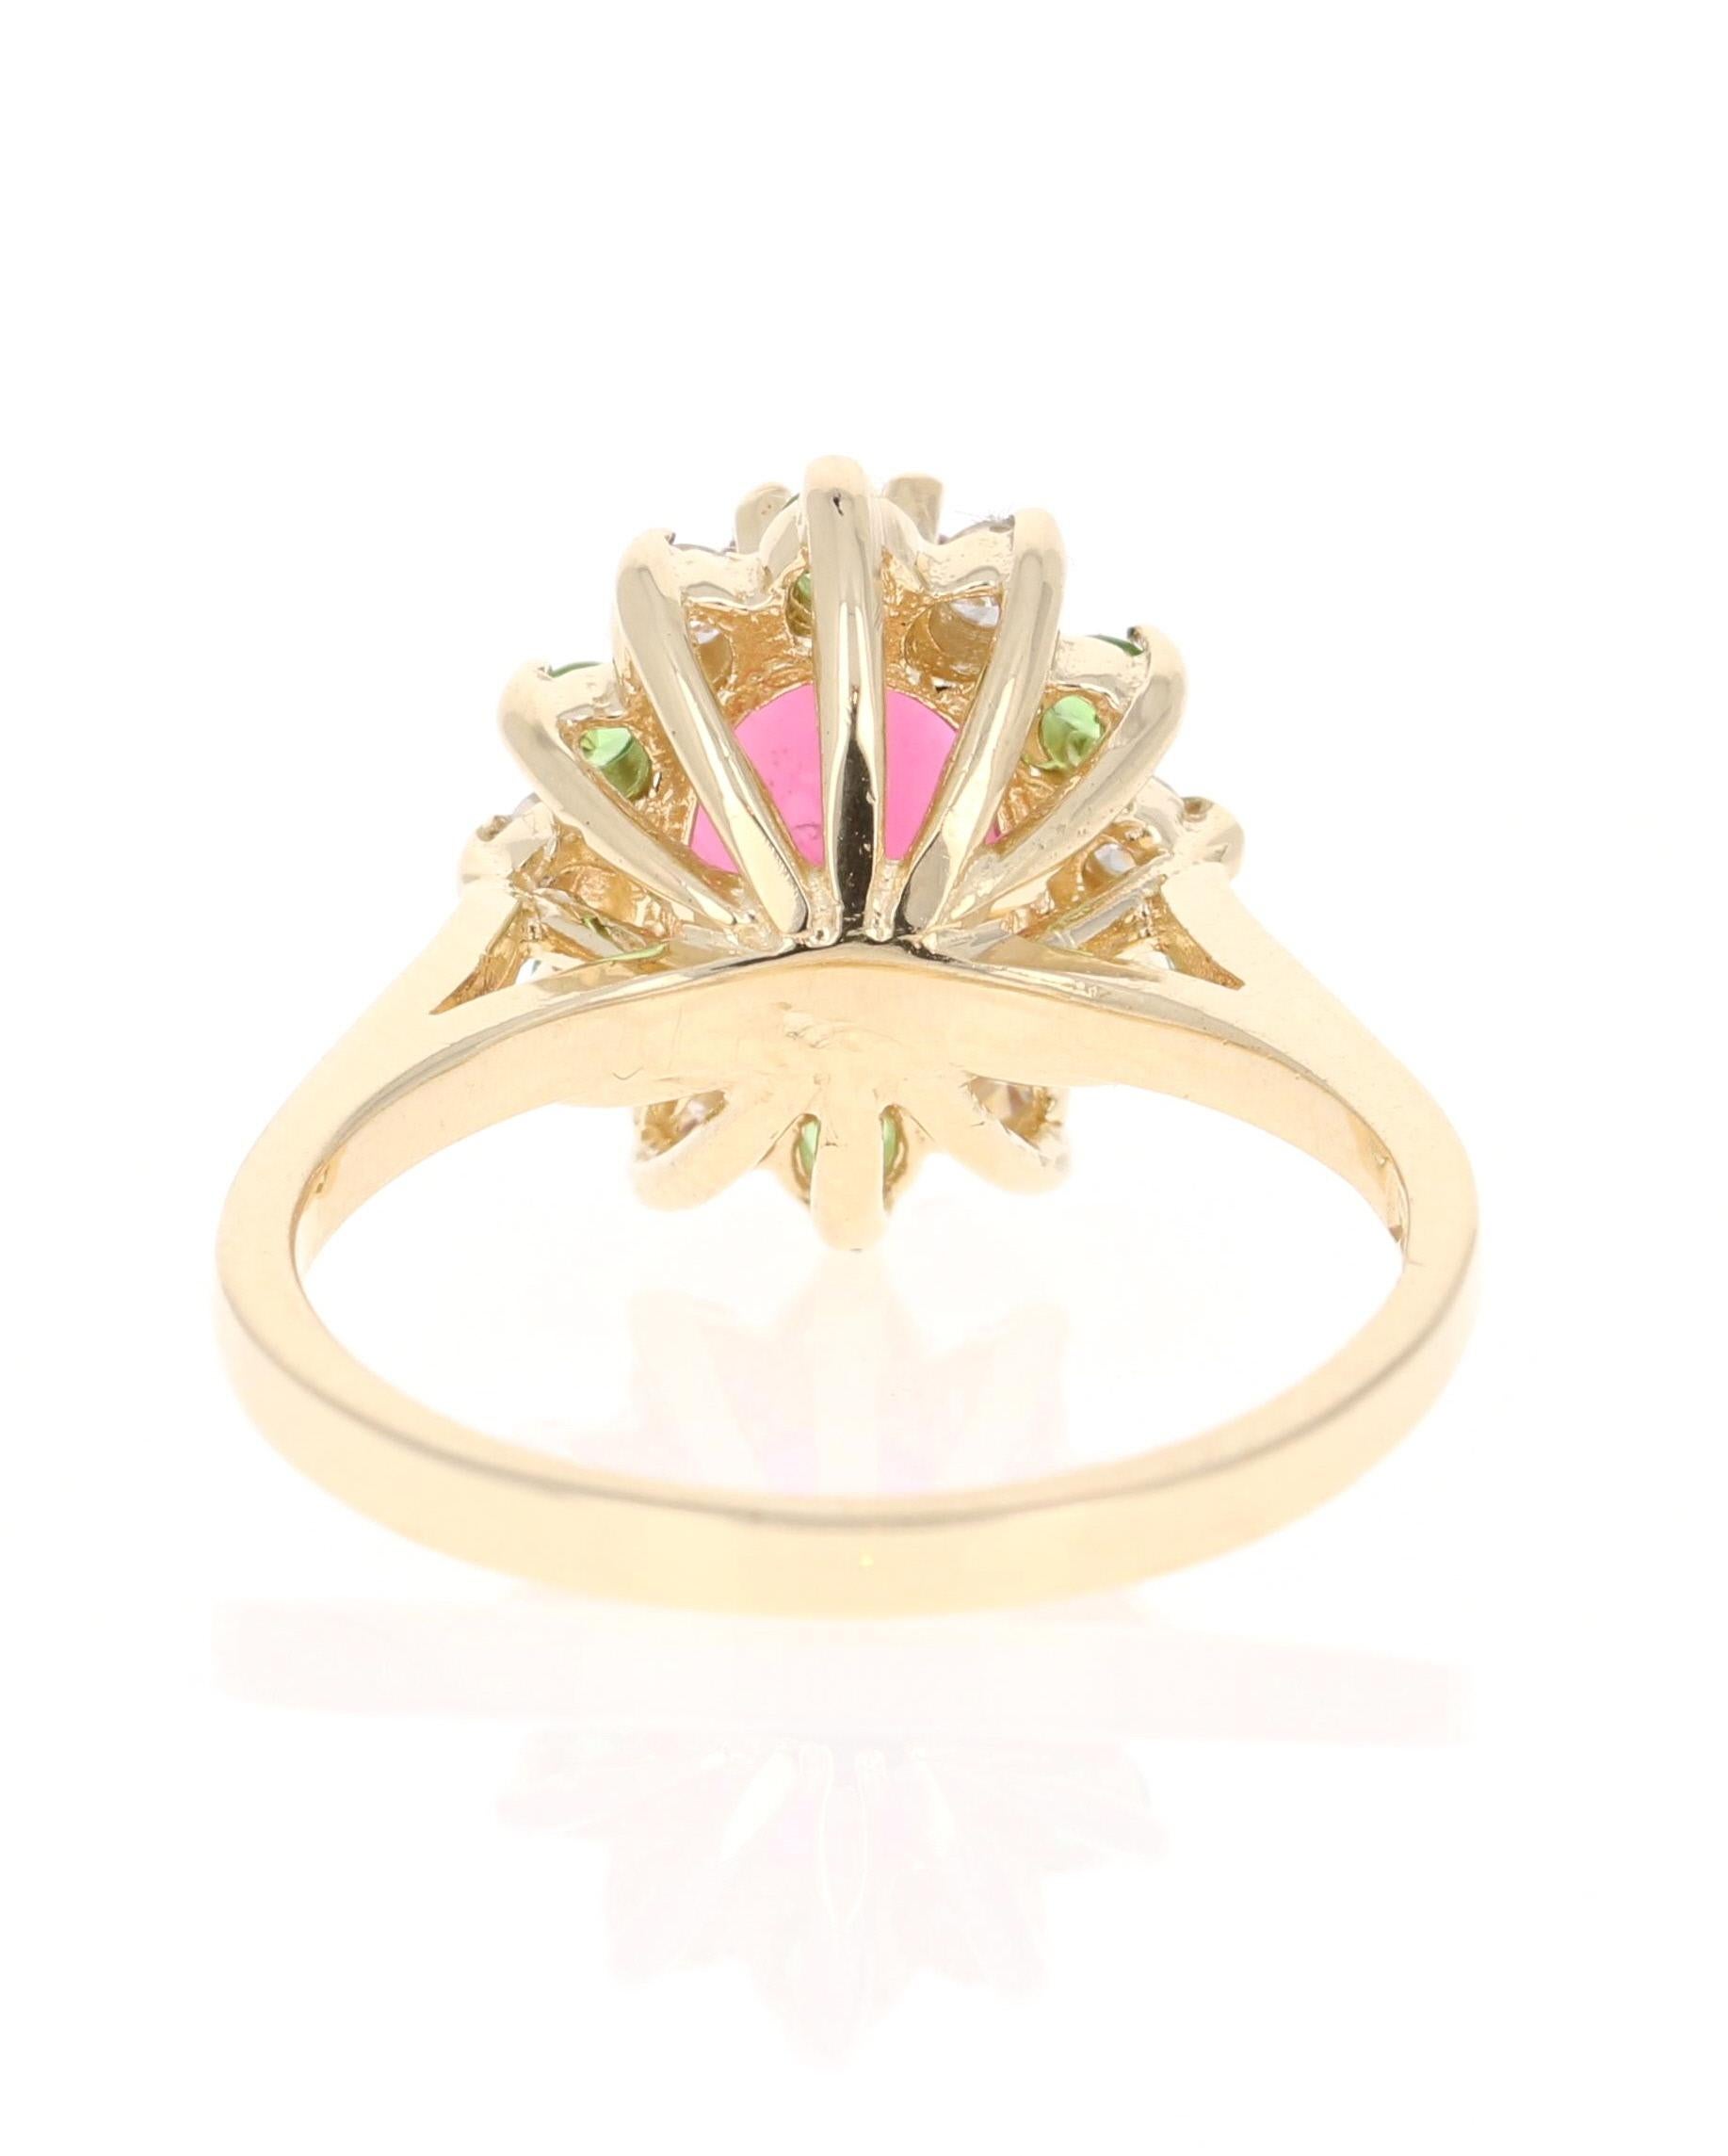 Oval Cut 1.97 Carat Pink Tourmaline Tsavorite Diamond 14 Karat Yellow Gold Ring For Sale